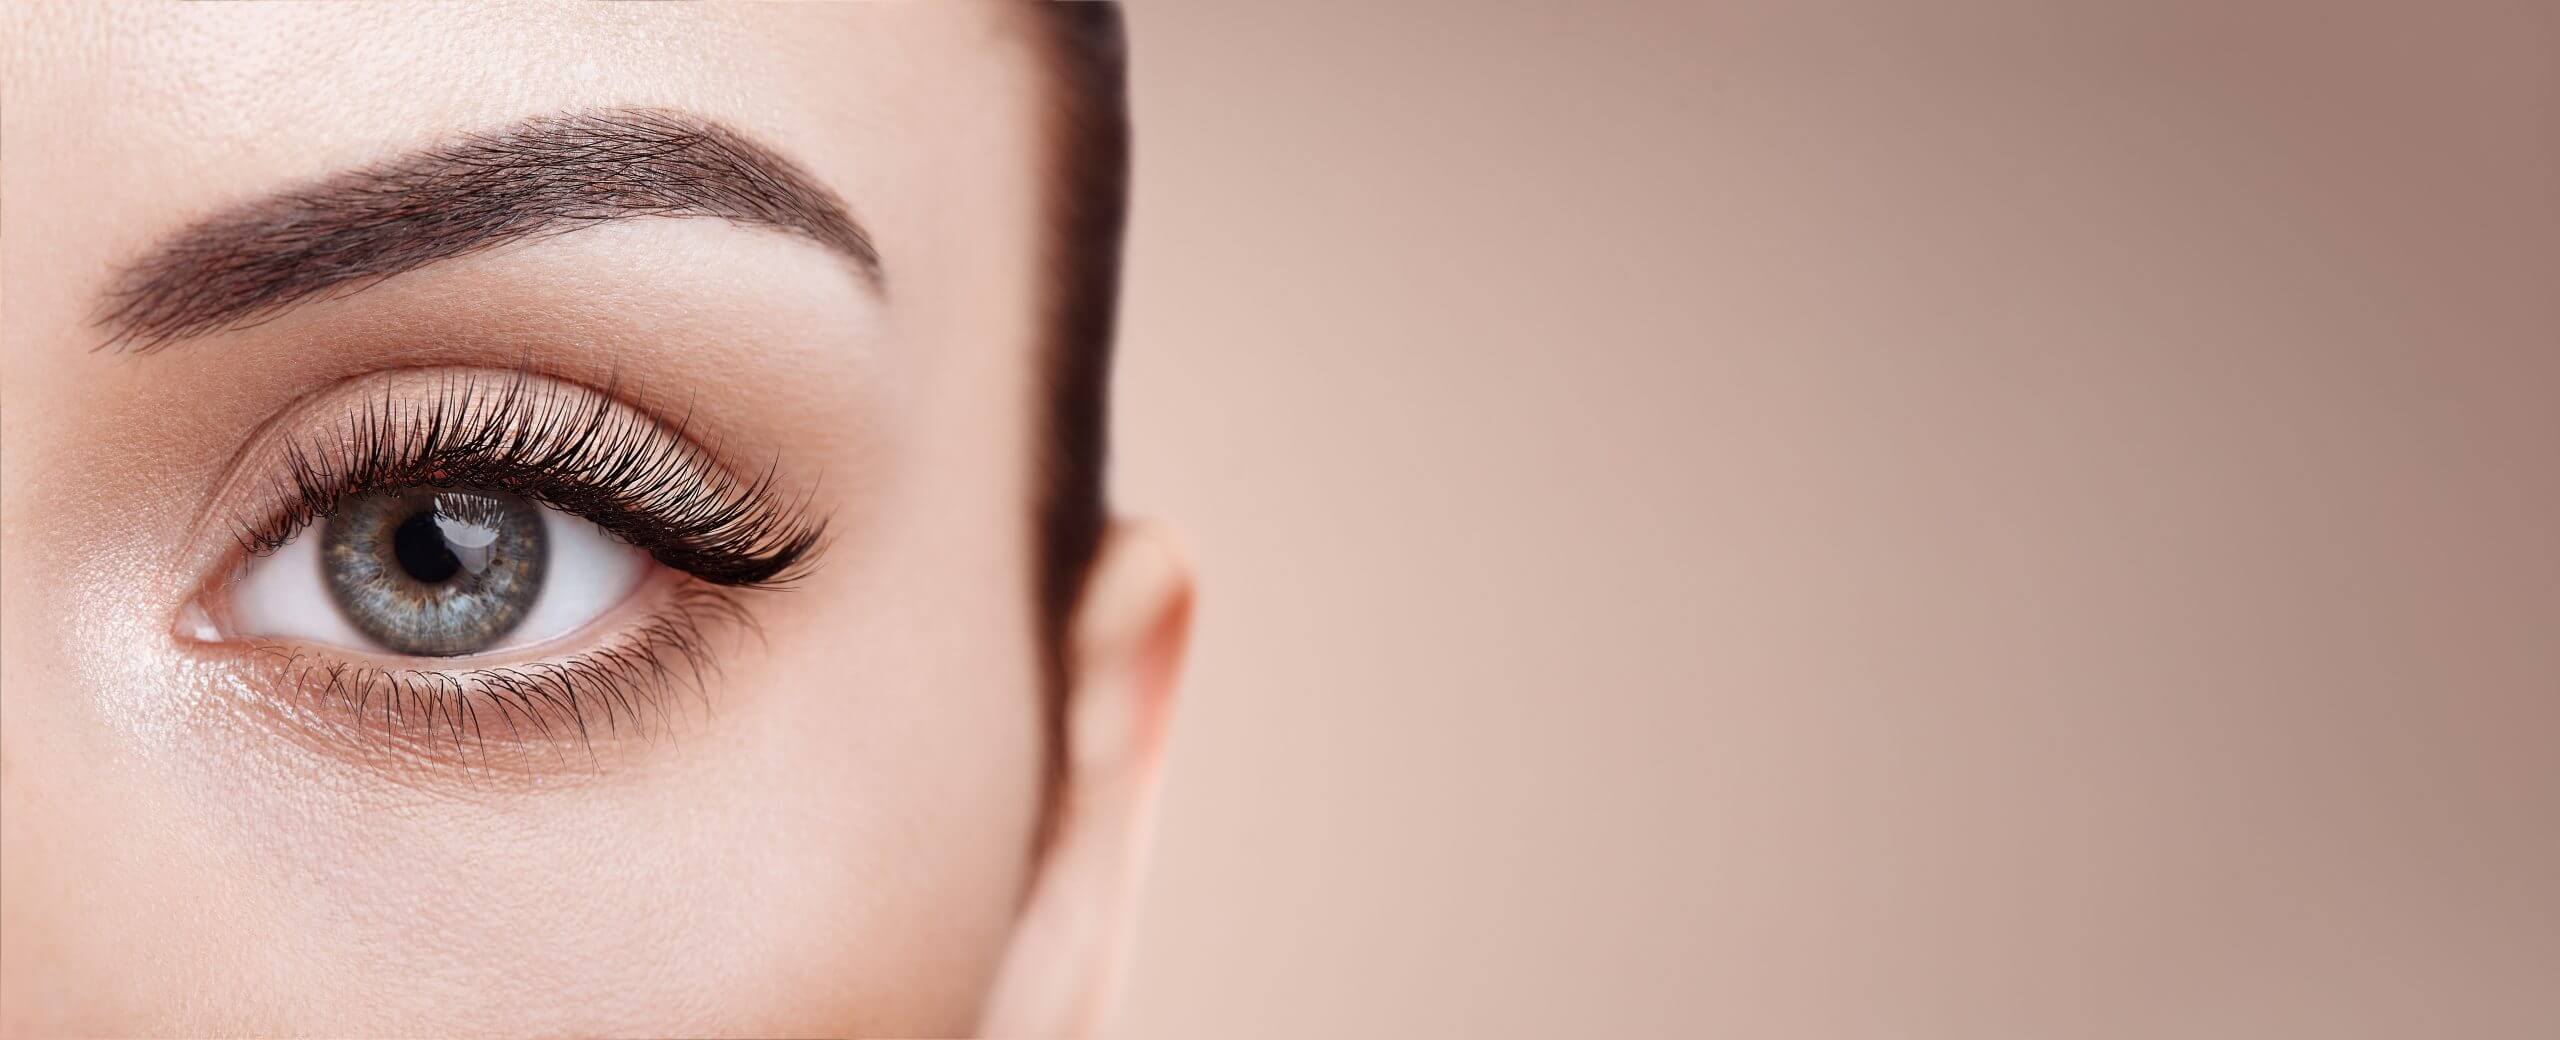 Woman eye lashes in closeup